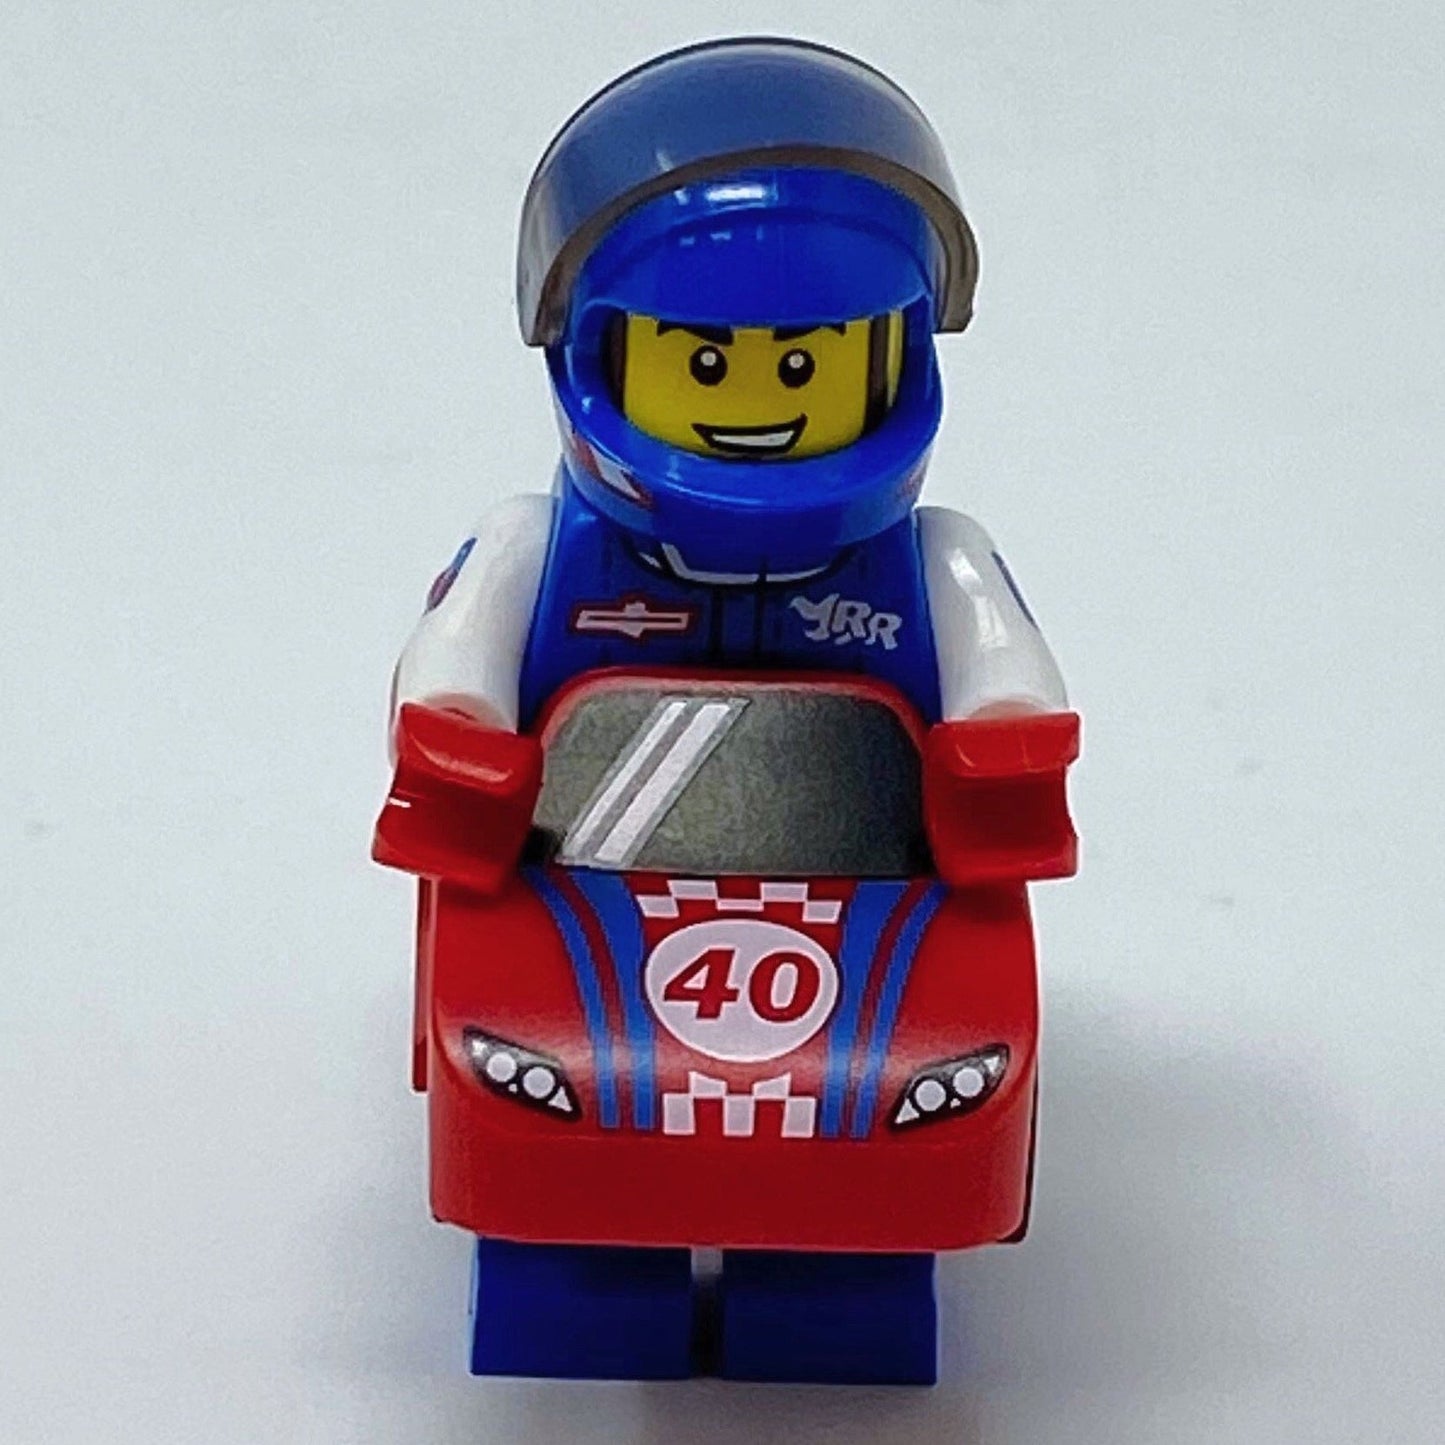 S18 Race Car Guy - Series 18 Minifigure (col324)